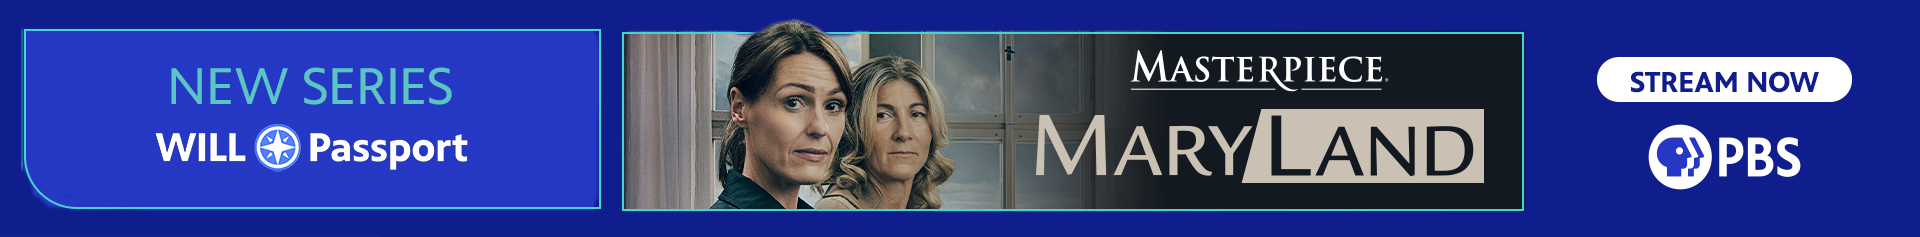 New PBS Masterpiece series: MaryLand